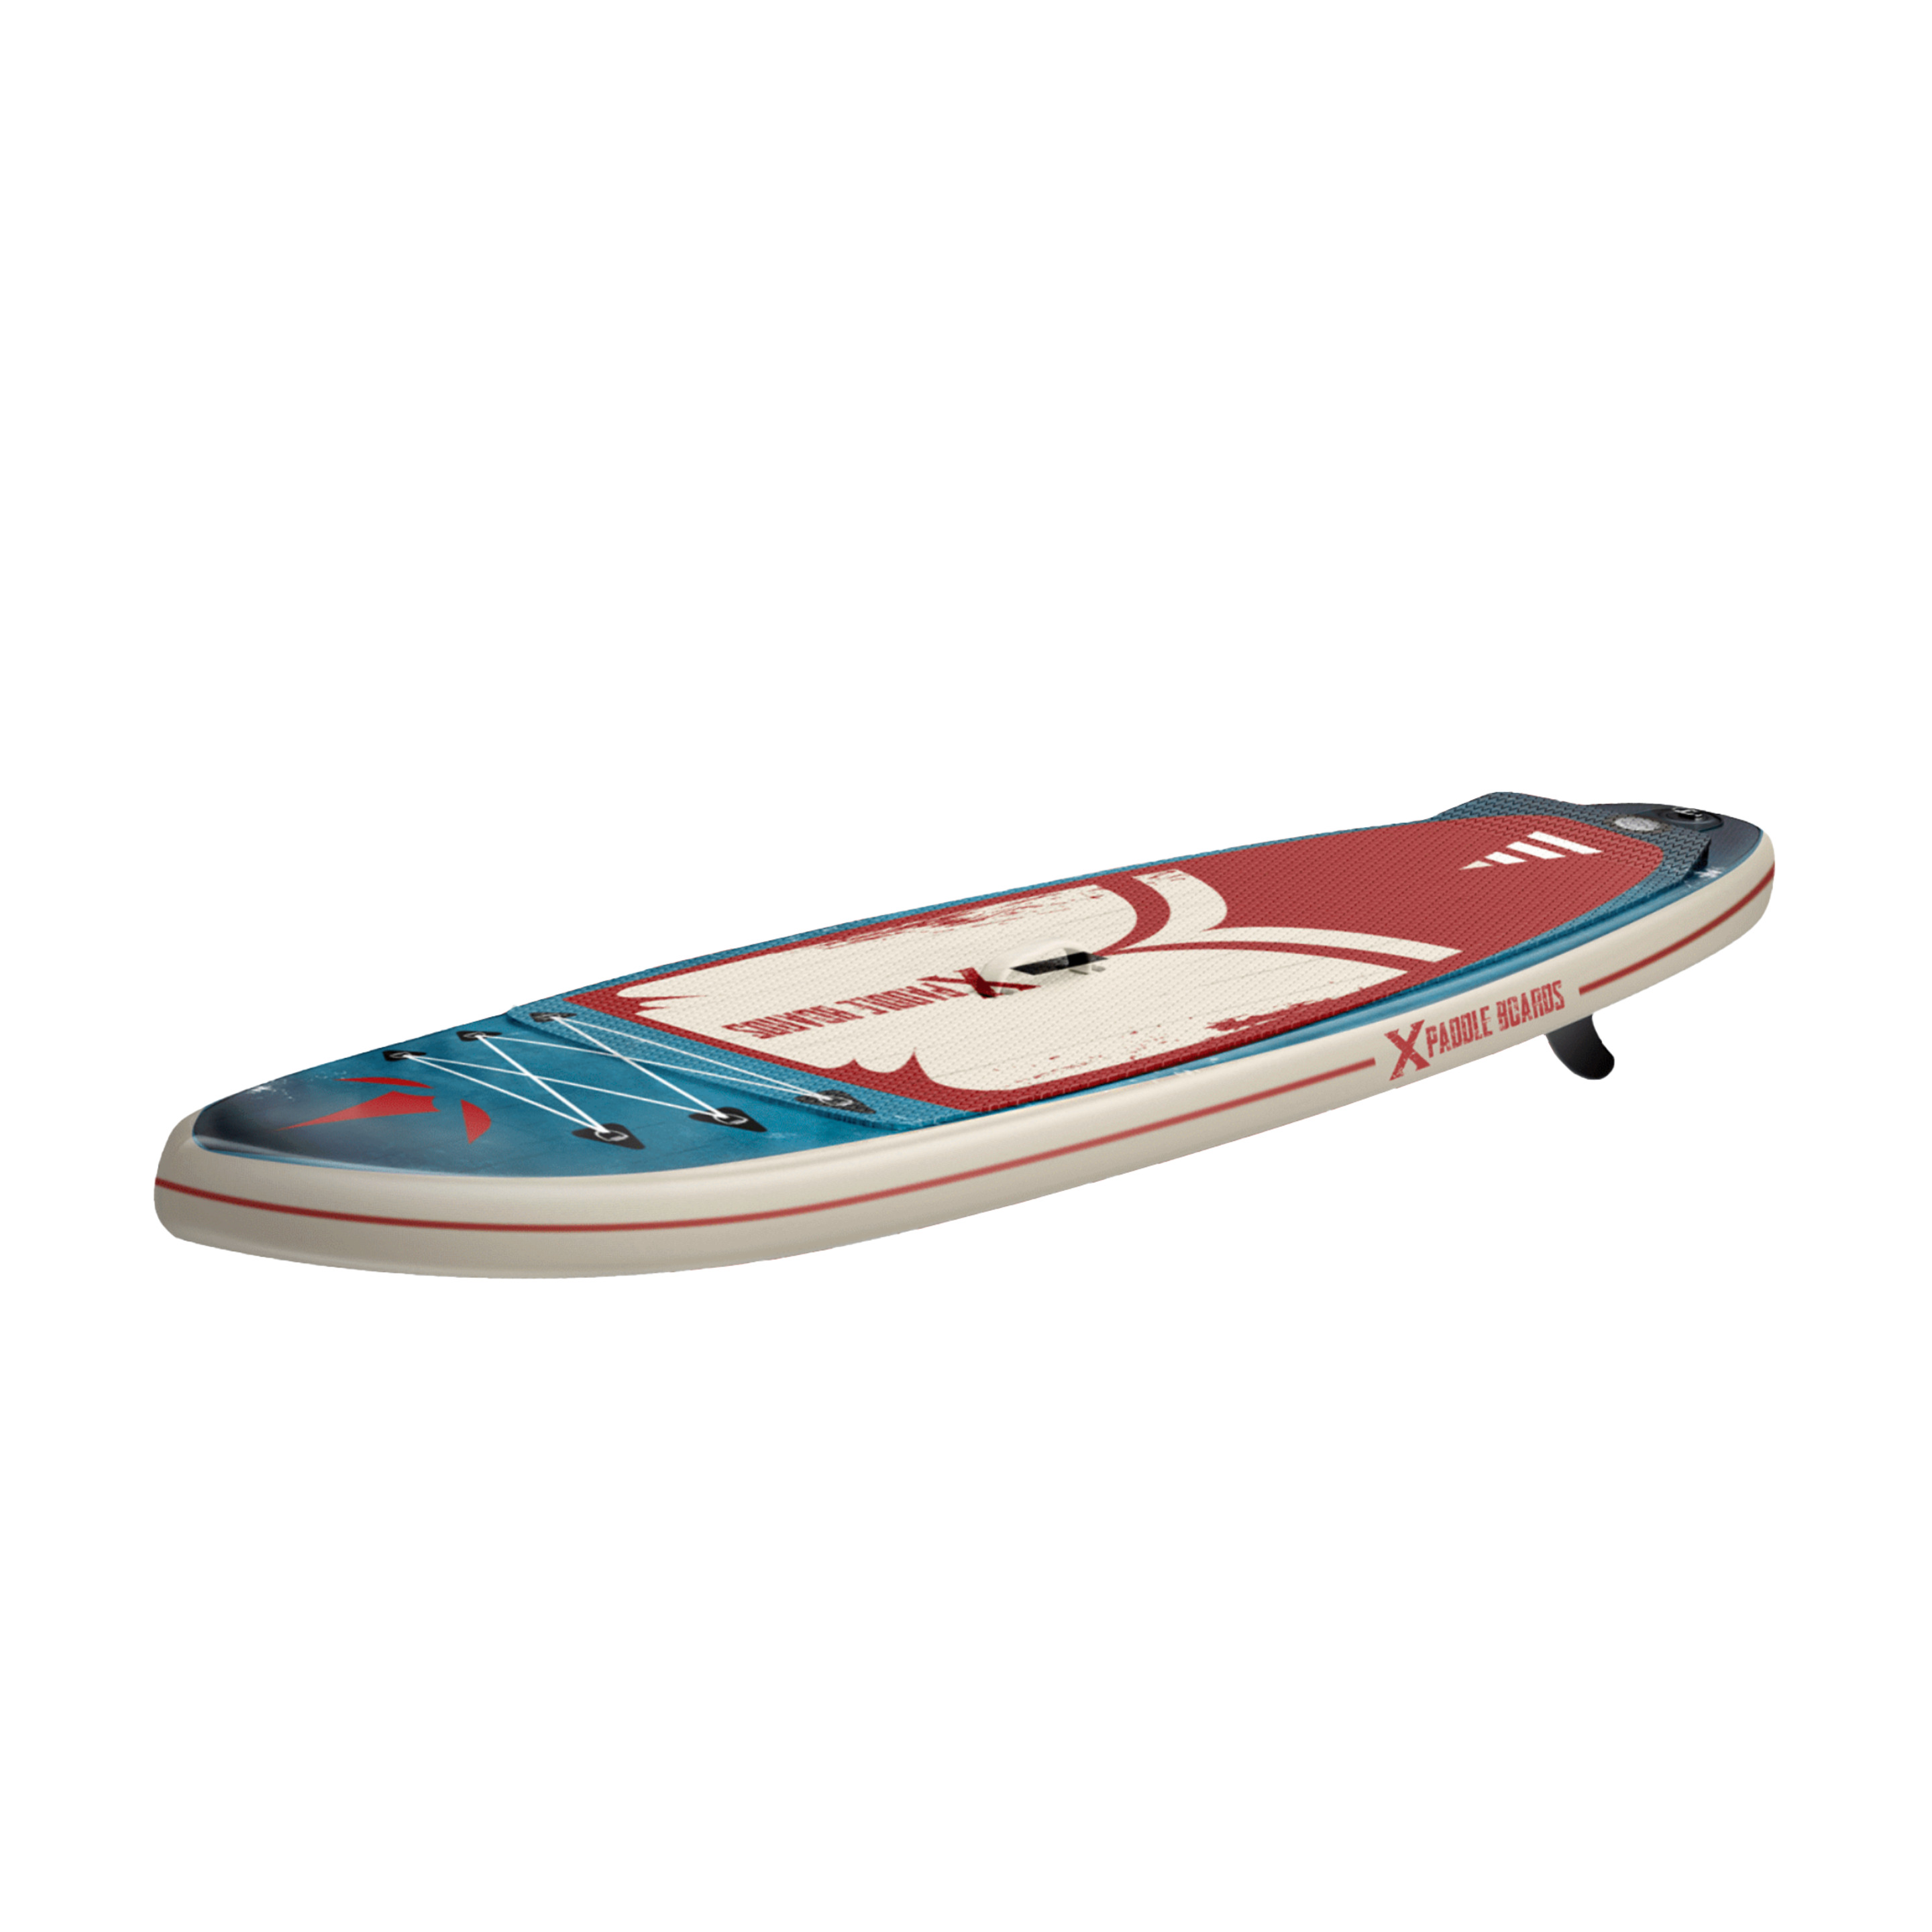 Tabla De Paddle Surf Hinchable  X-shark Kayak 320 X 82 X 15 Cm - Azul Aqua  MKP